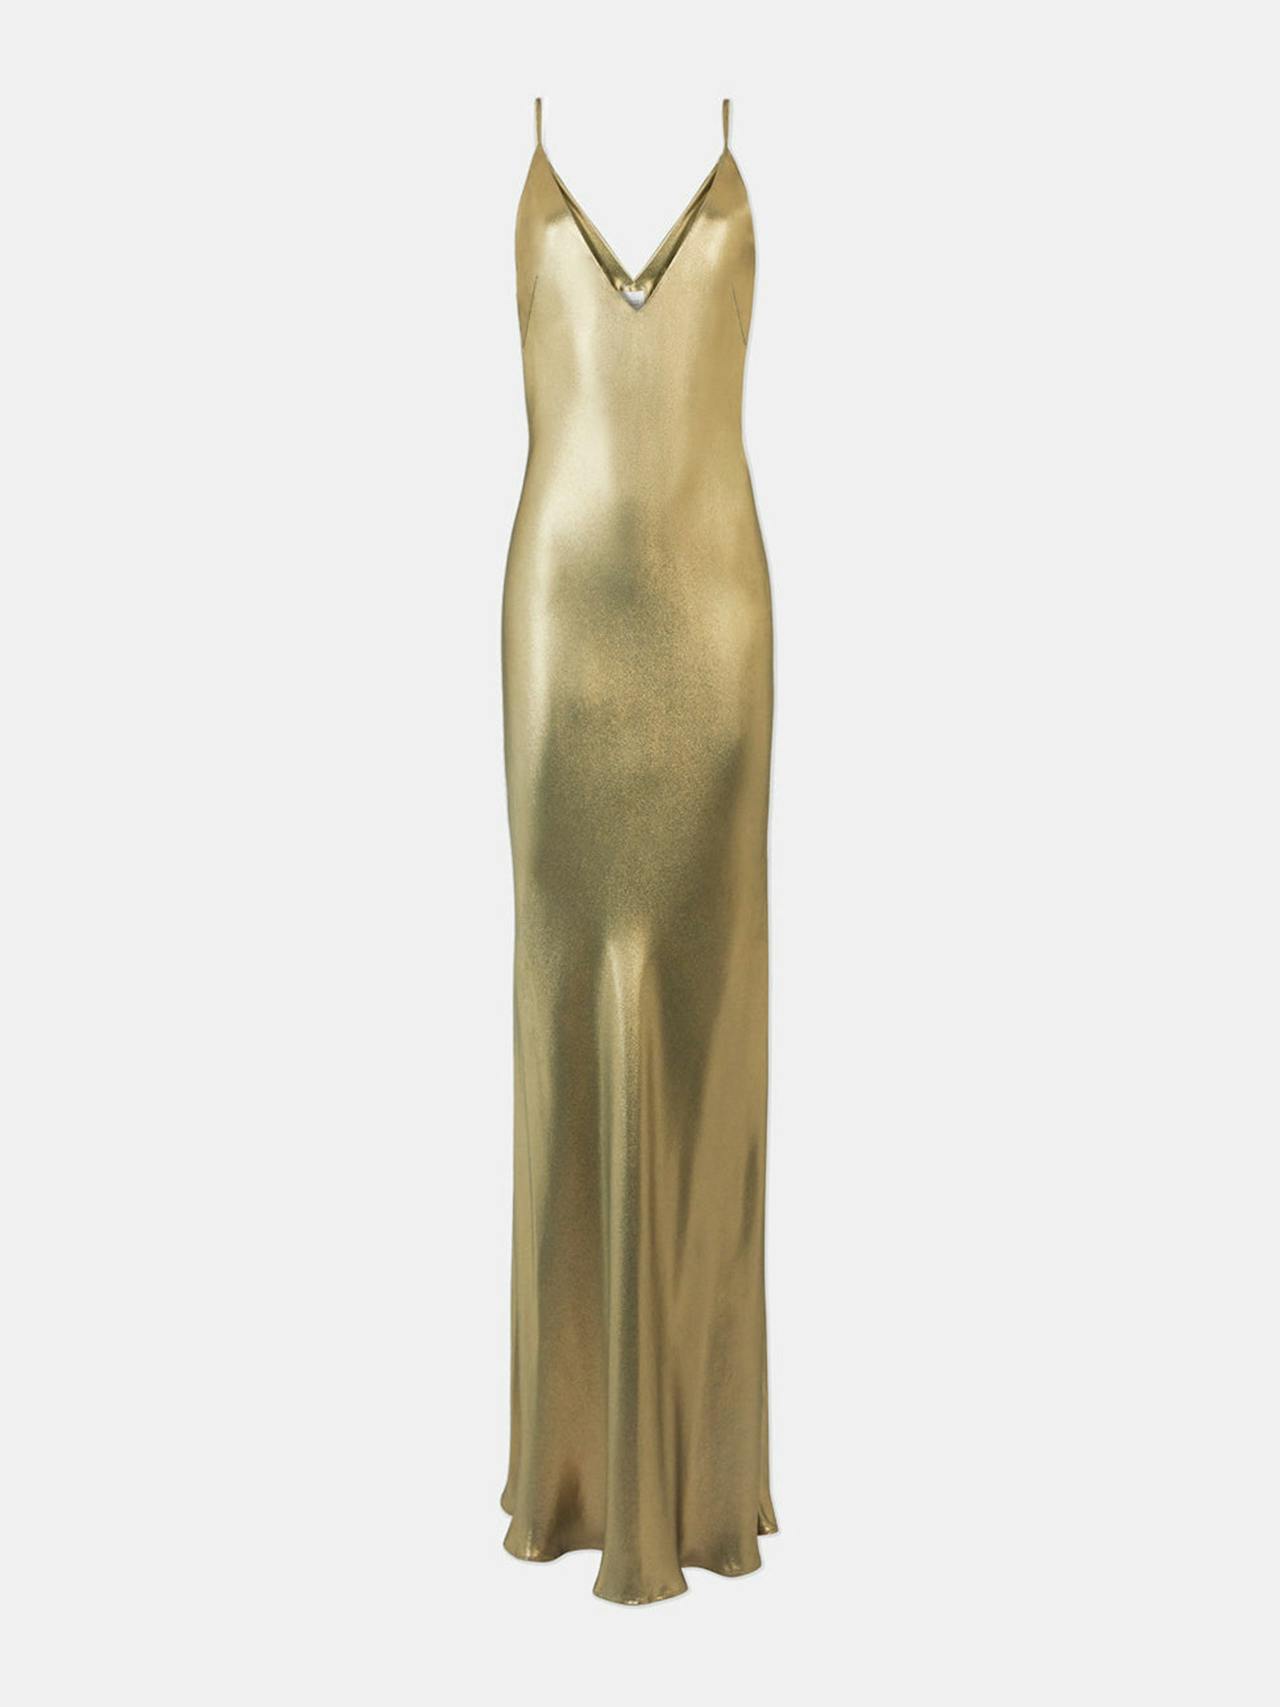 Galvanized gold slip dress